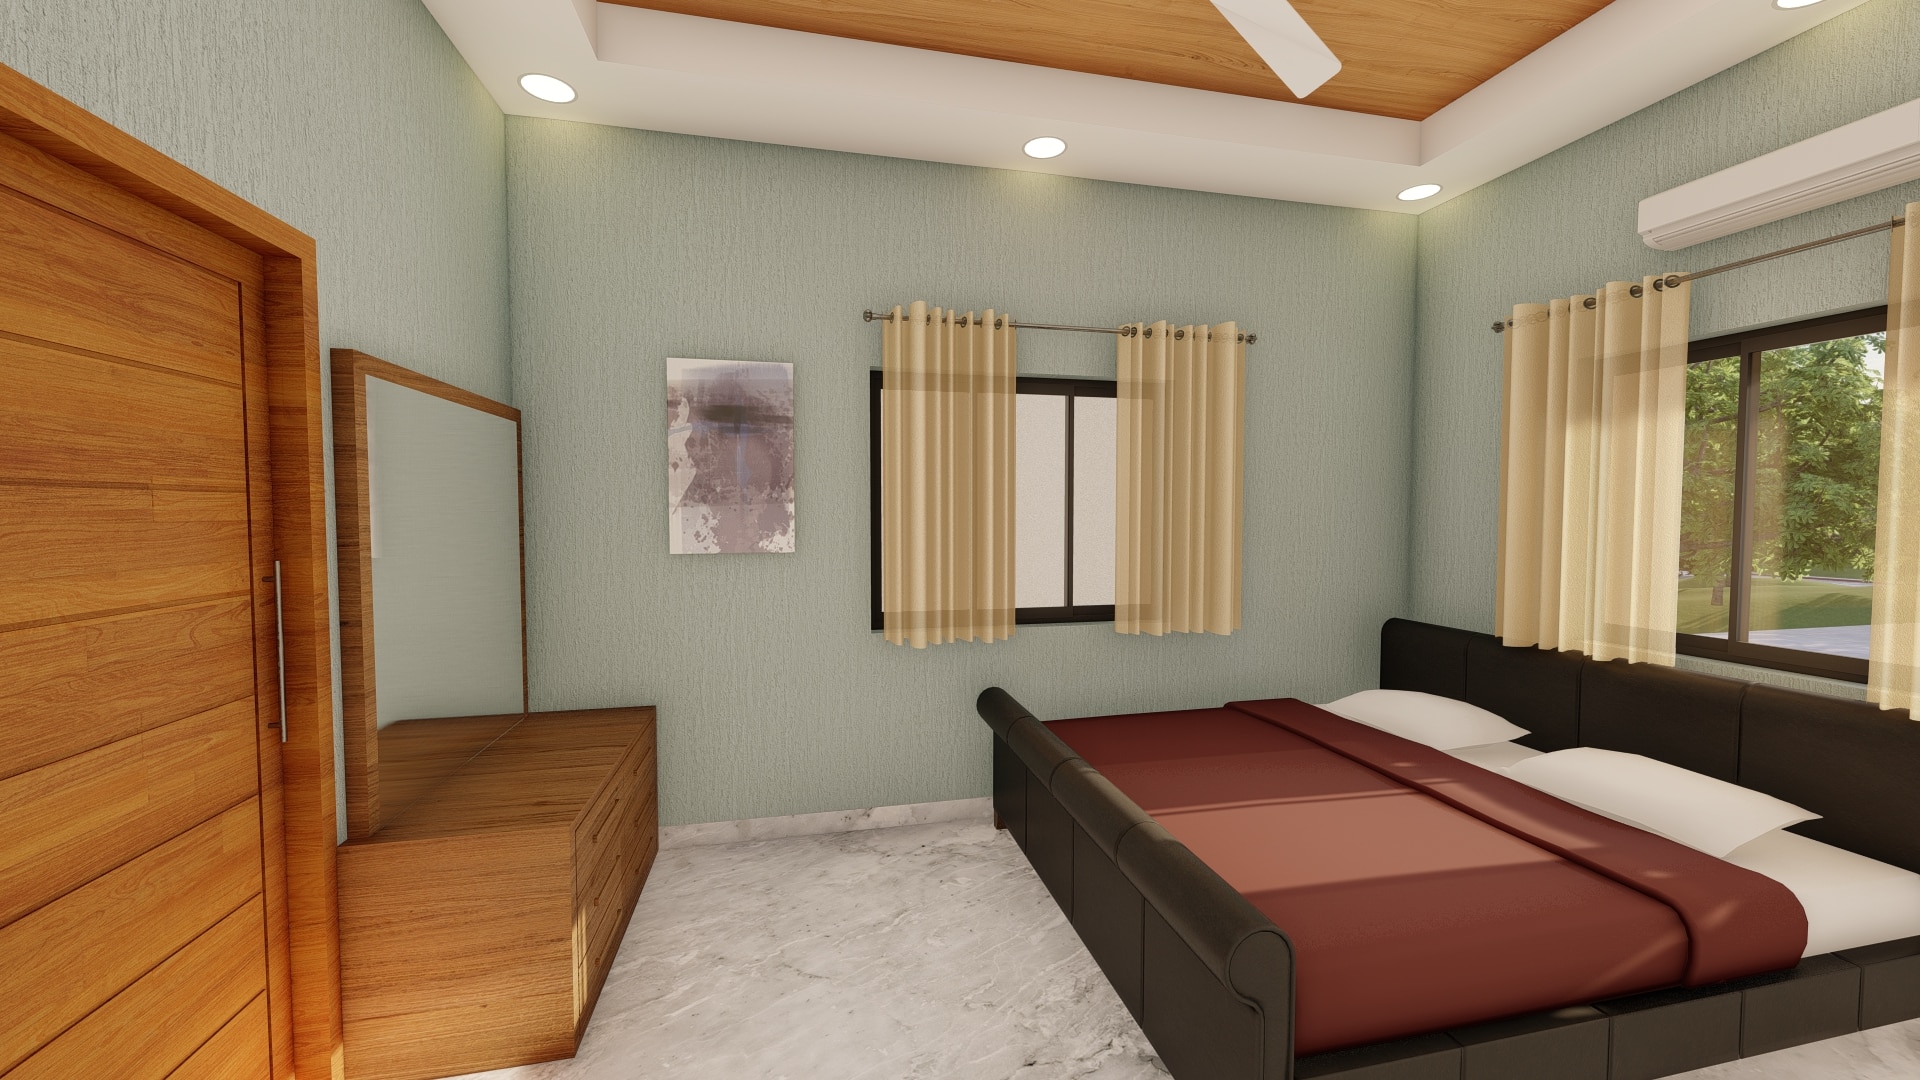 bedroom of new villa construction floor plan by urban terrace west facing 30x60 sq ft